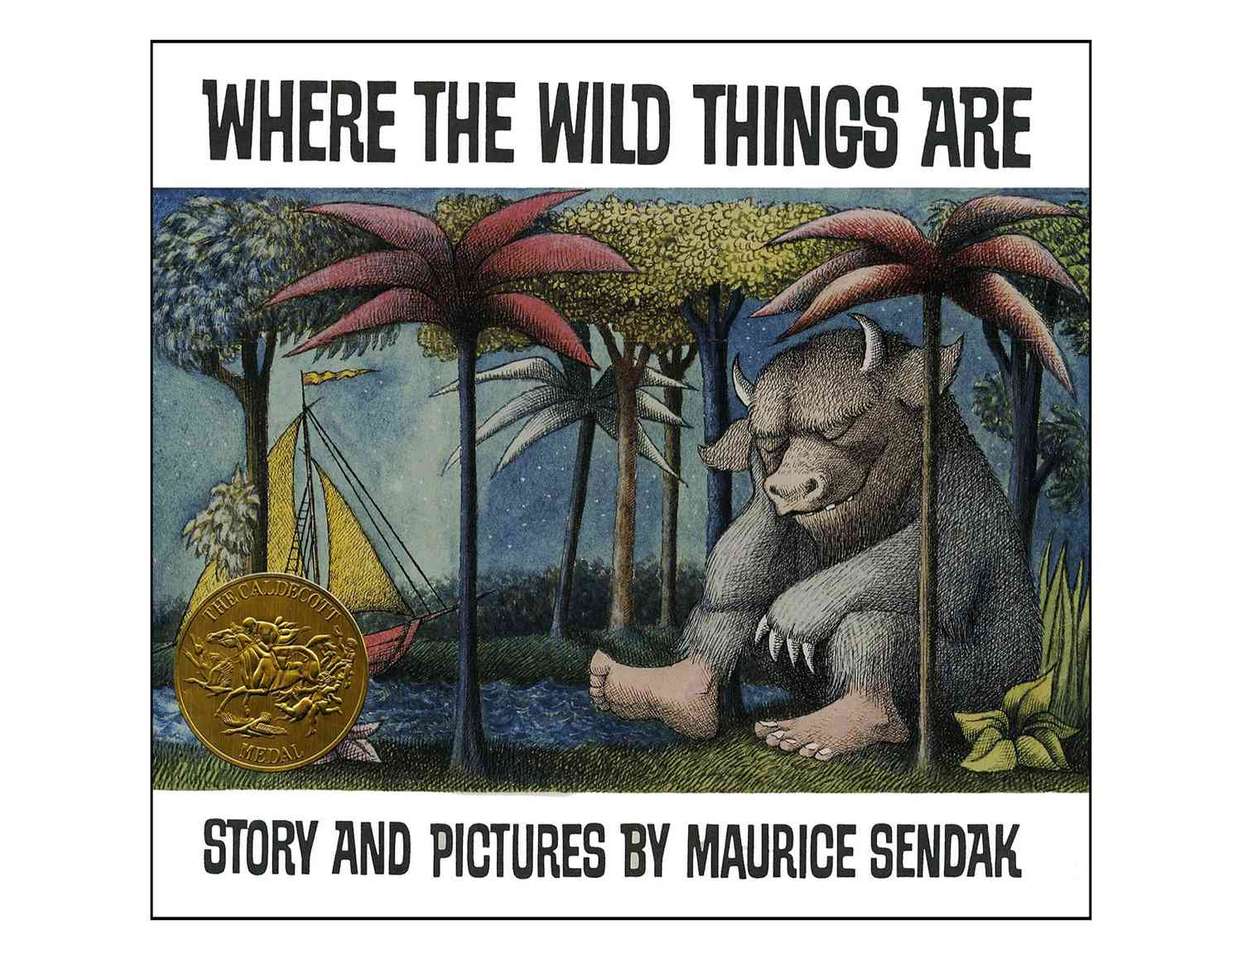 Capa do livro 'Onde vivem as coisas selvagens' puzzle online